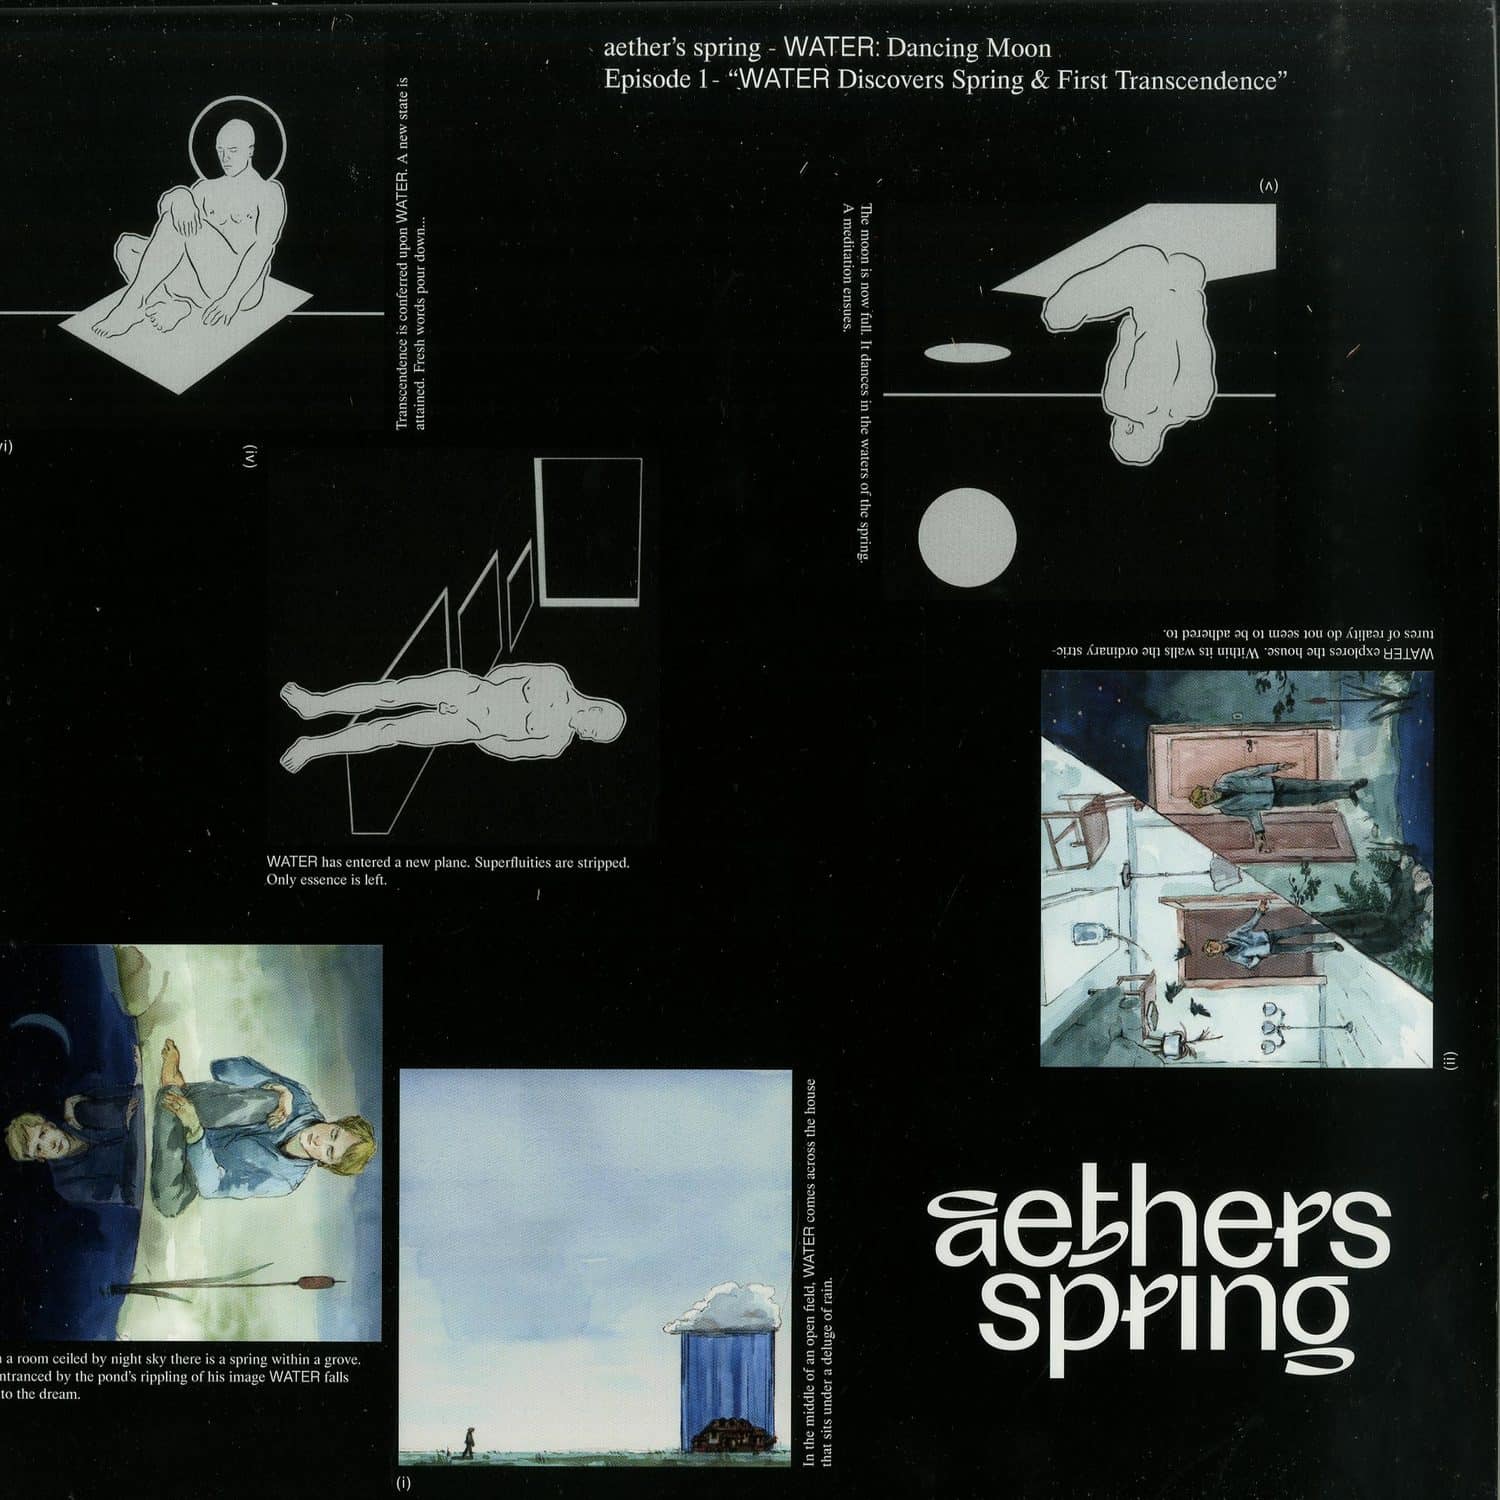 Aethers Spring - WATER: DANCING MOON